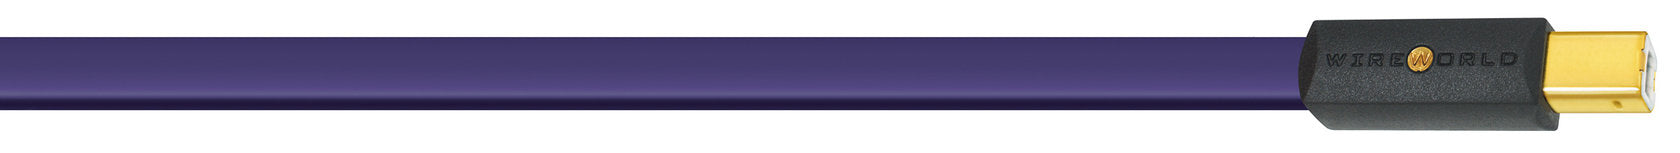 WireWorld Ultraviolet 8 USB 3.0, A -> B, 1 m